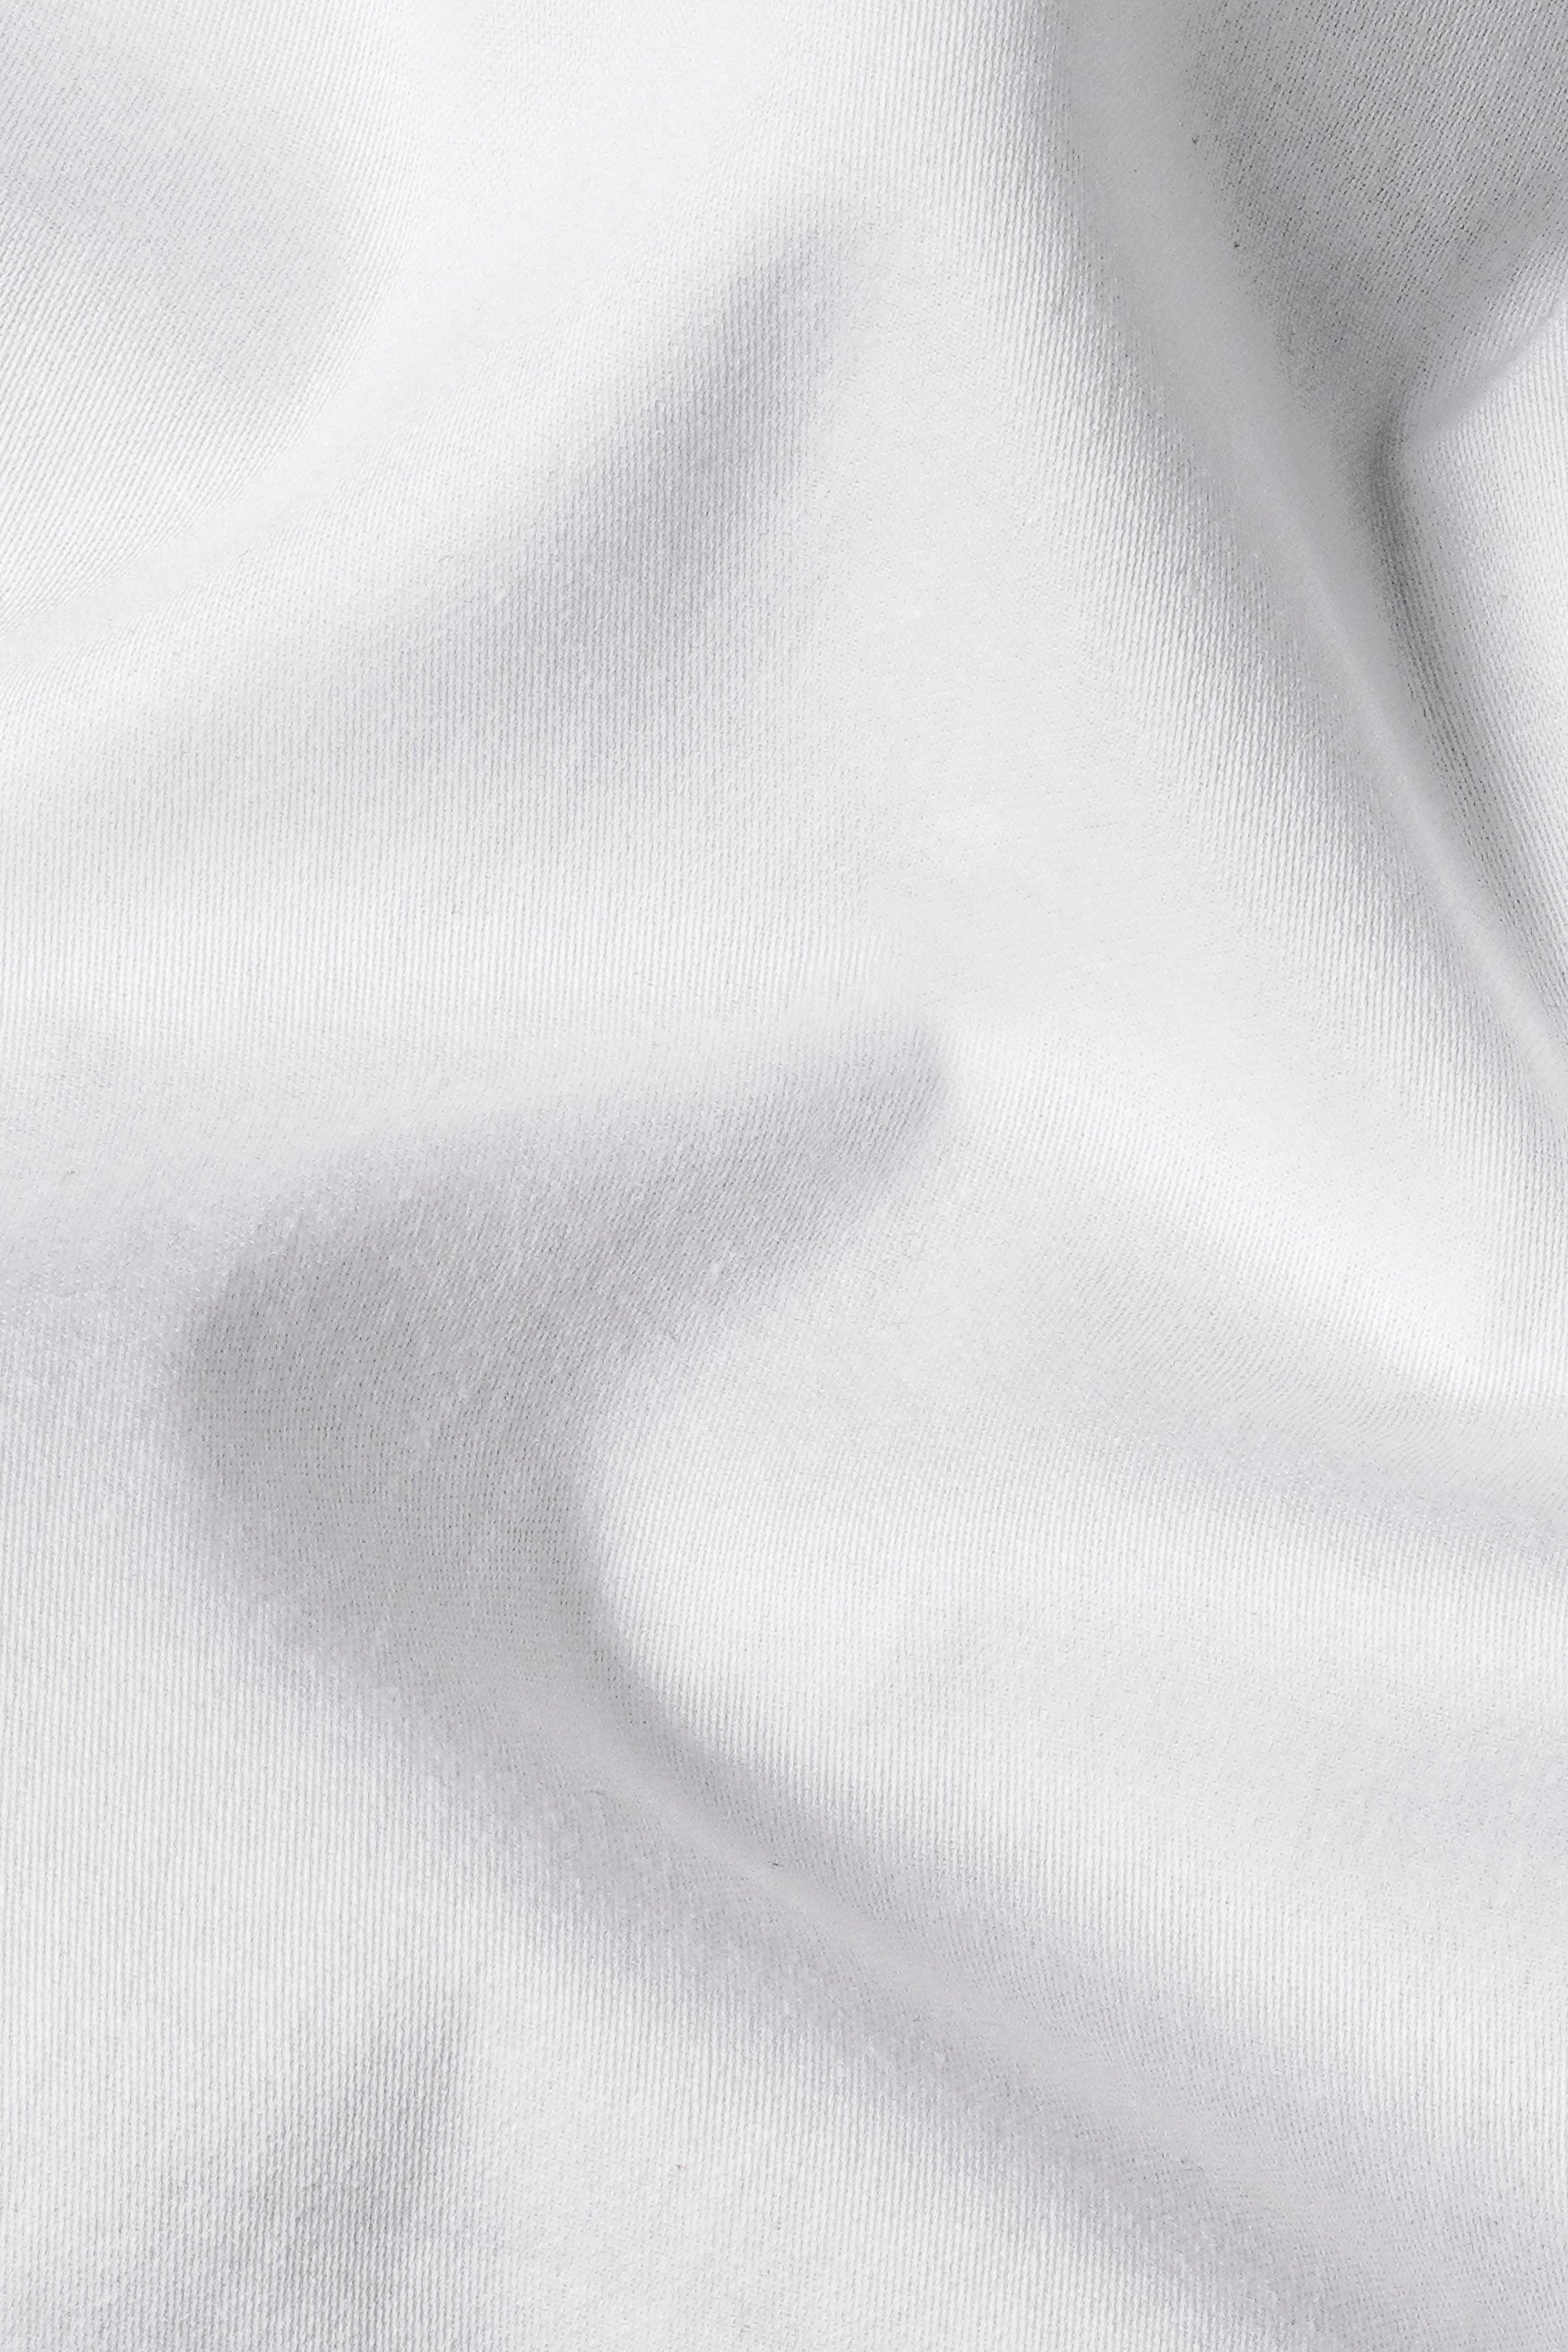 Bright White Super Soft Premium Cotton Designer Lounge Pant